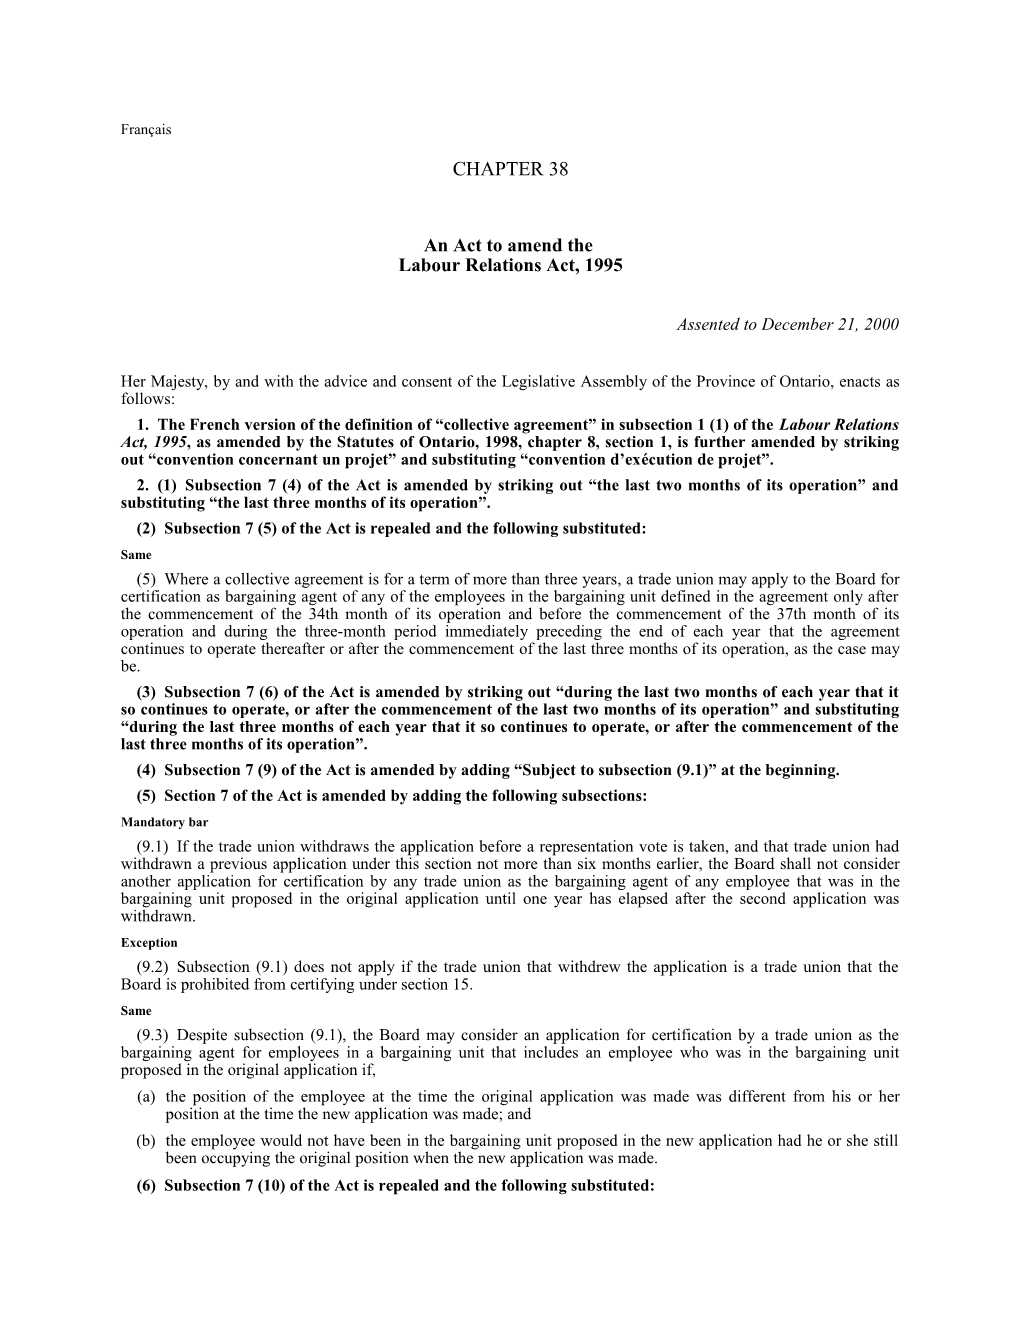 Labour Relations Amendment Act, 2000, S.O. 2000, C. 38 - Bill 139